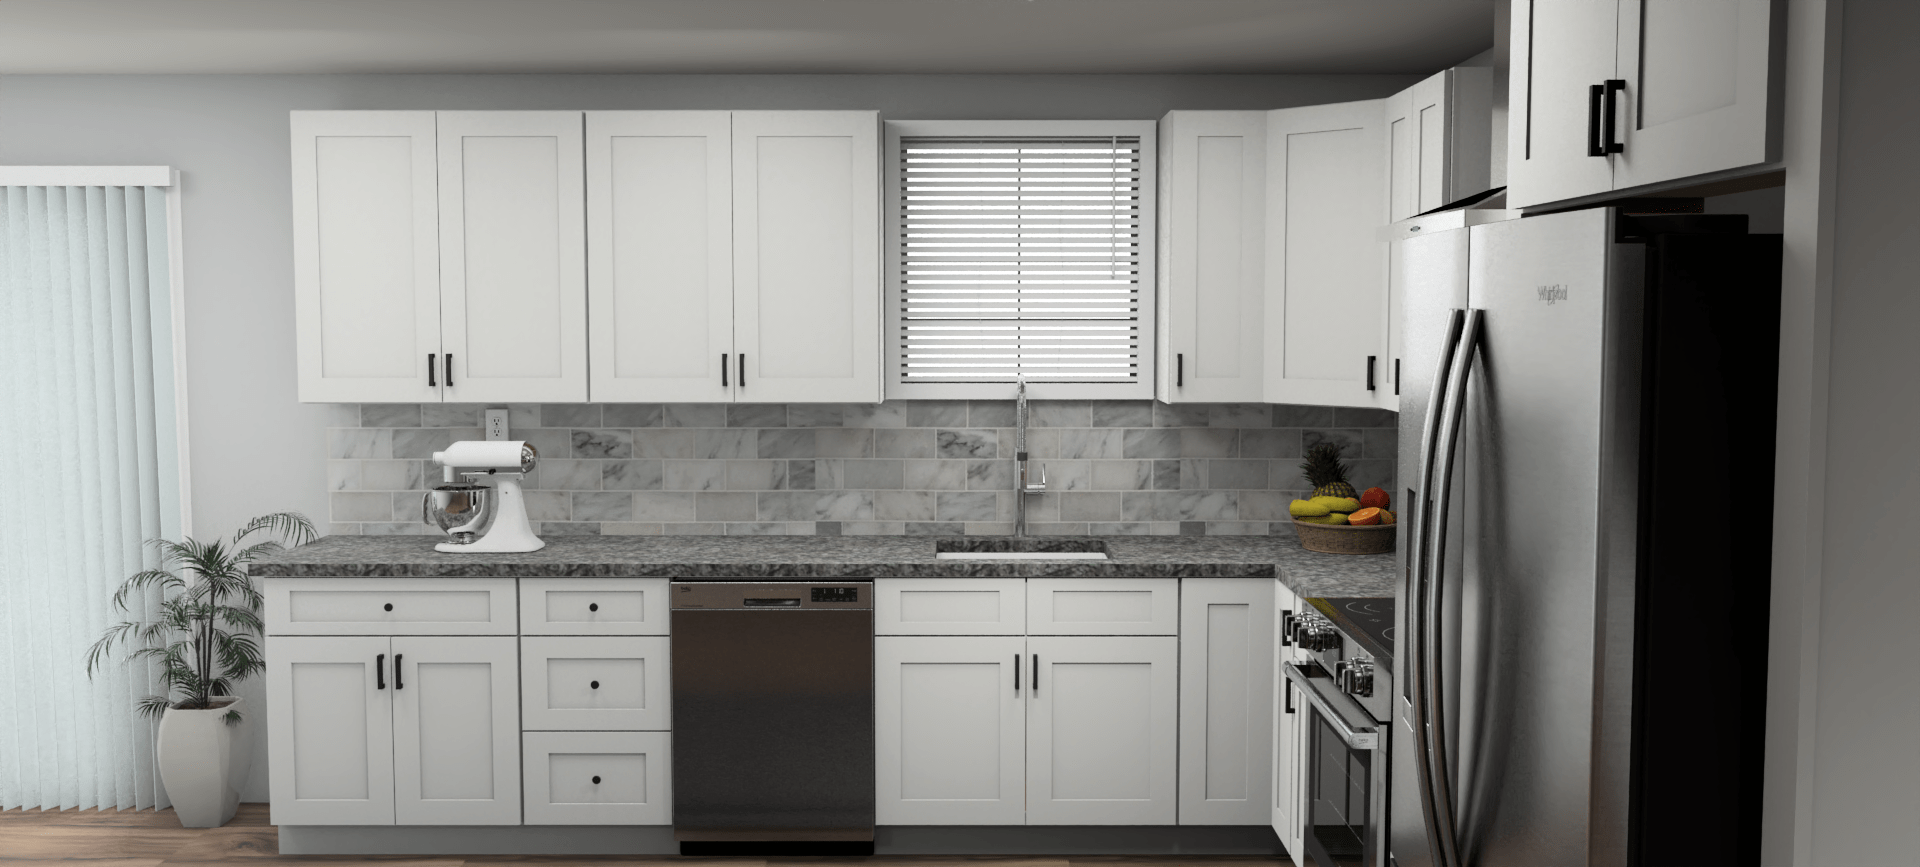 Fabuwood Allure Galaxy Frost 12 x 12 L Shaped Kitchen Side Layout Photo